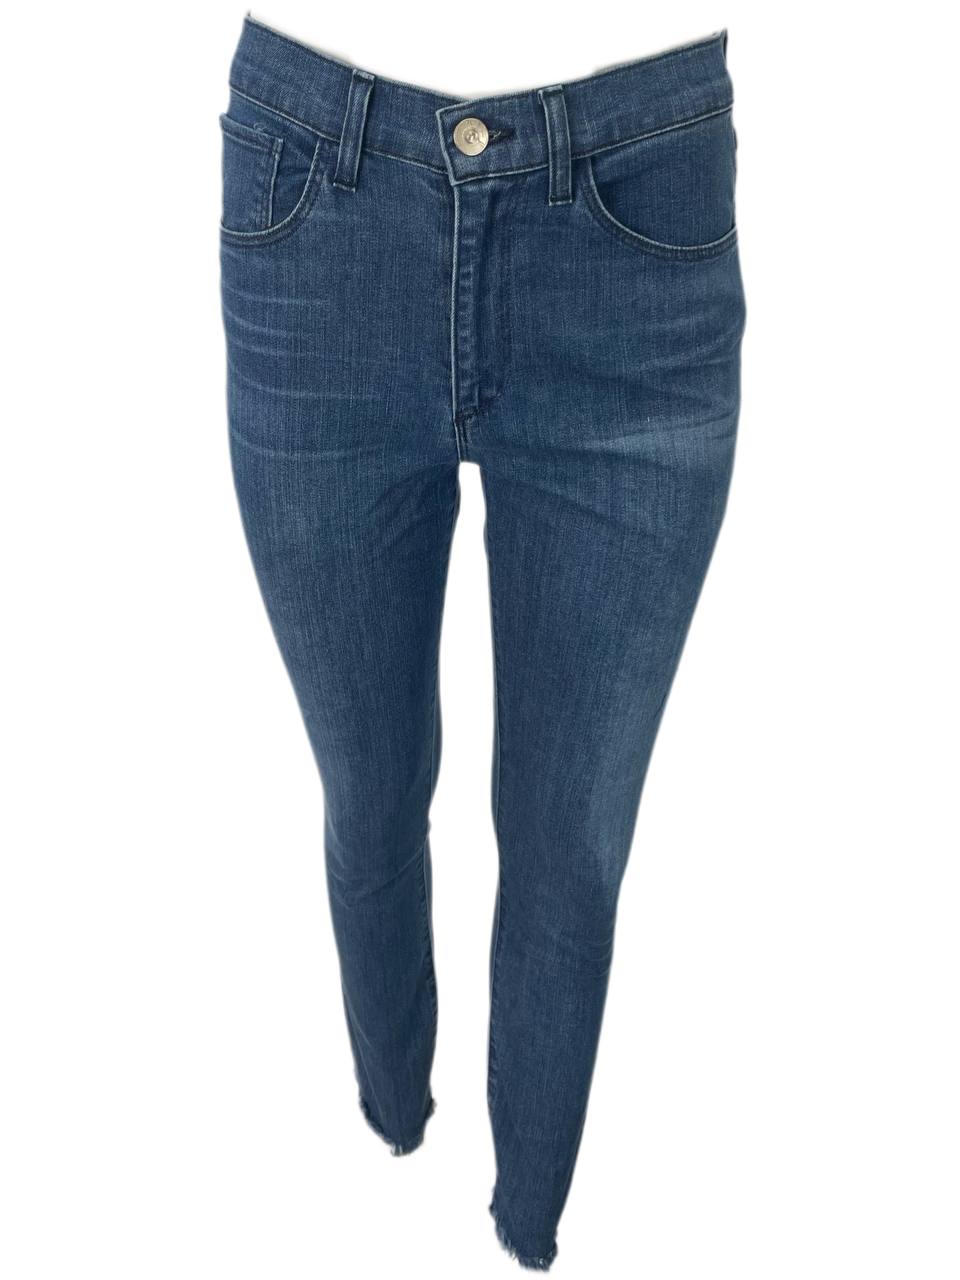 Marina Rinaldi Wonder-fit High-rise Jeans - Navy